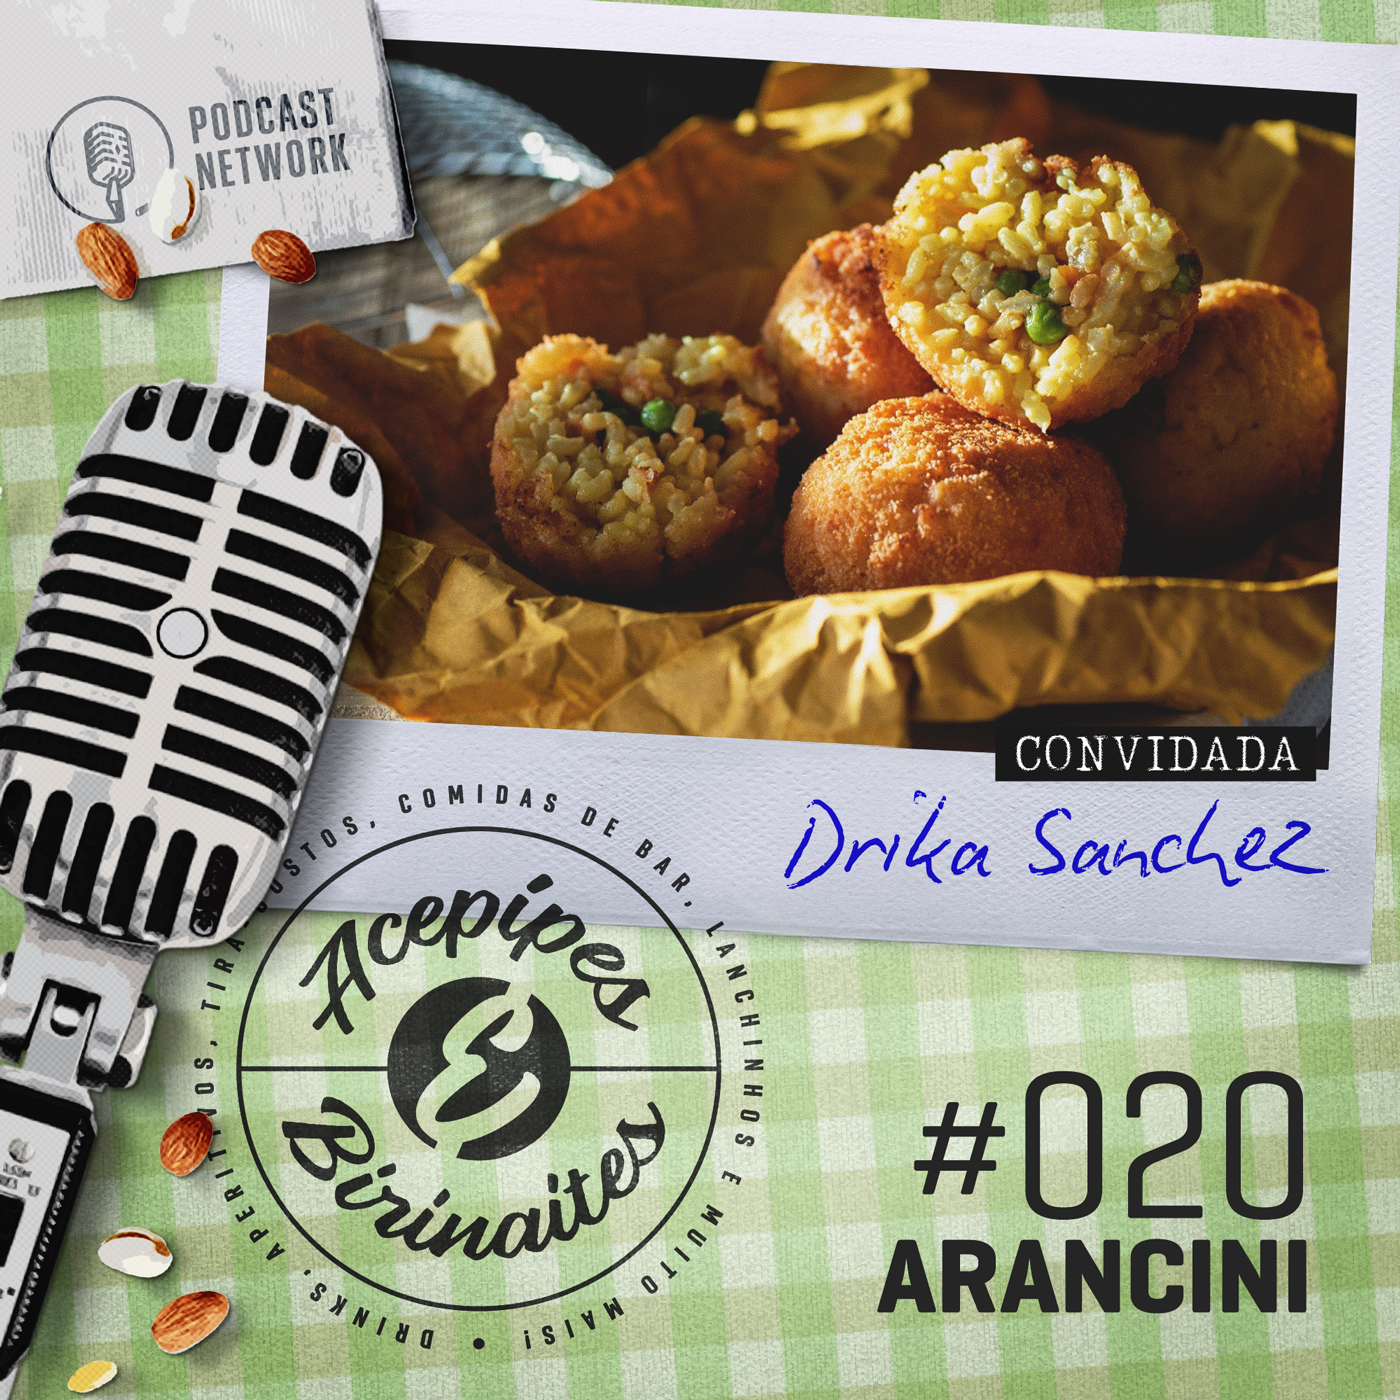 Acepipes e Birinaites #020 - Arancini, com Drika Sanchez